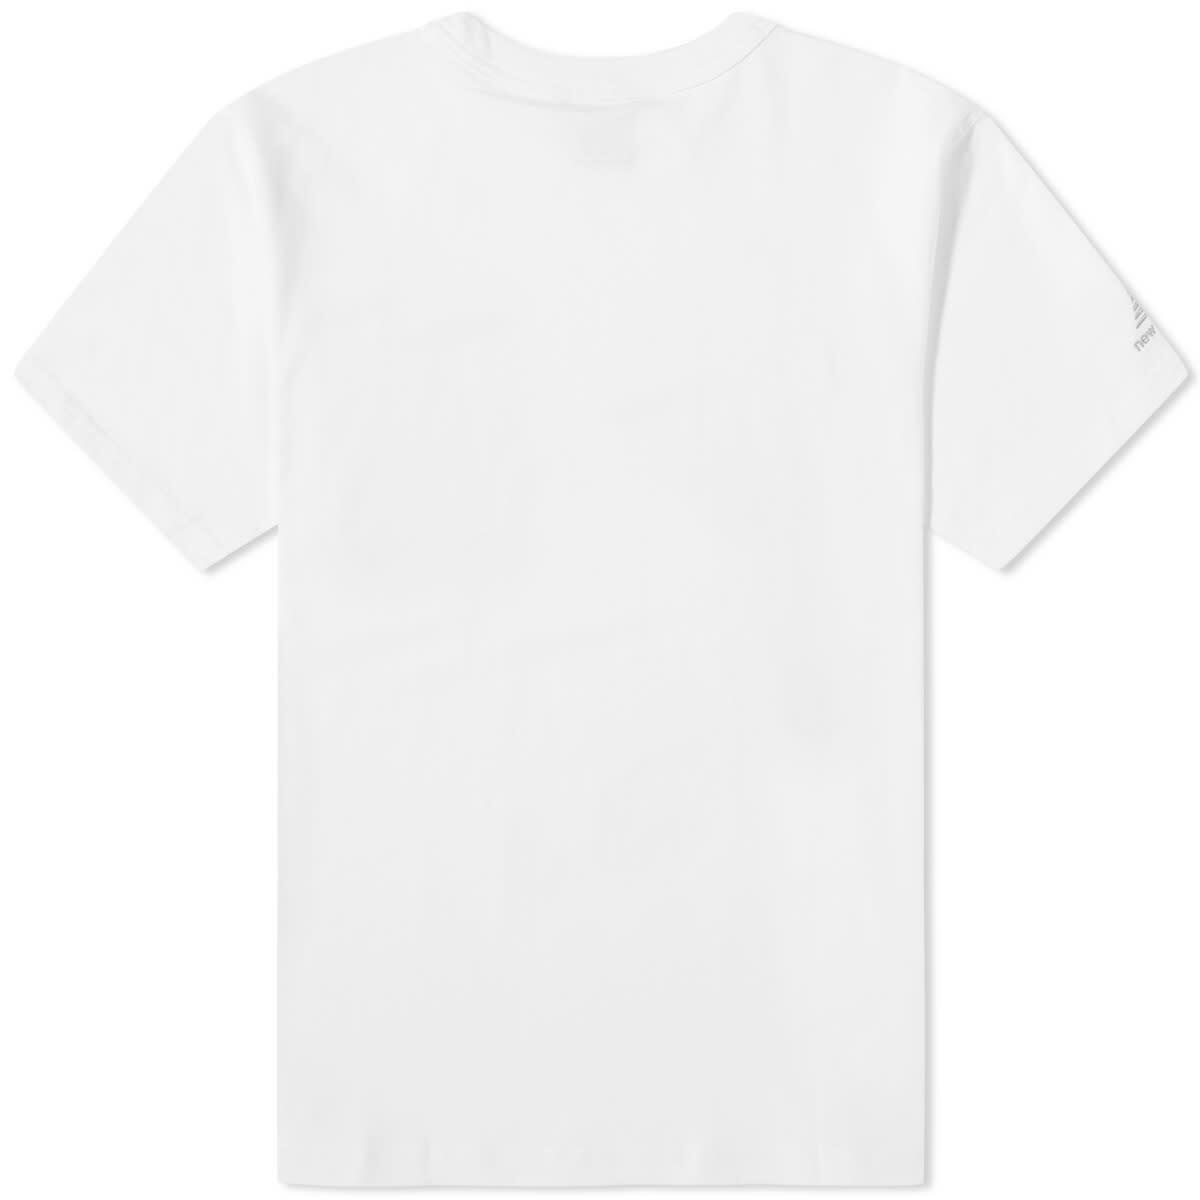 New Paul x Rich in White Balance New T-Shirt Balance